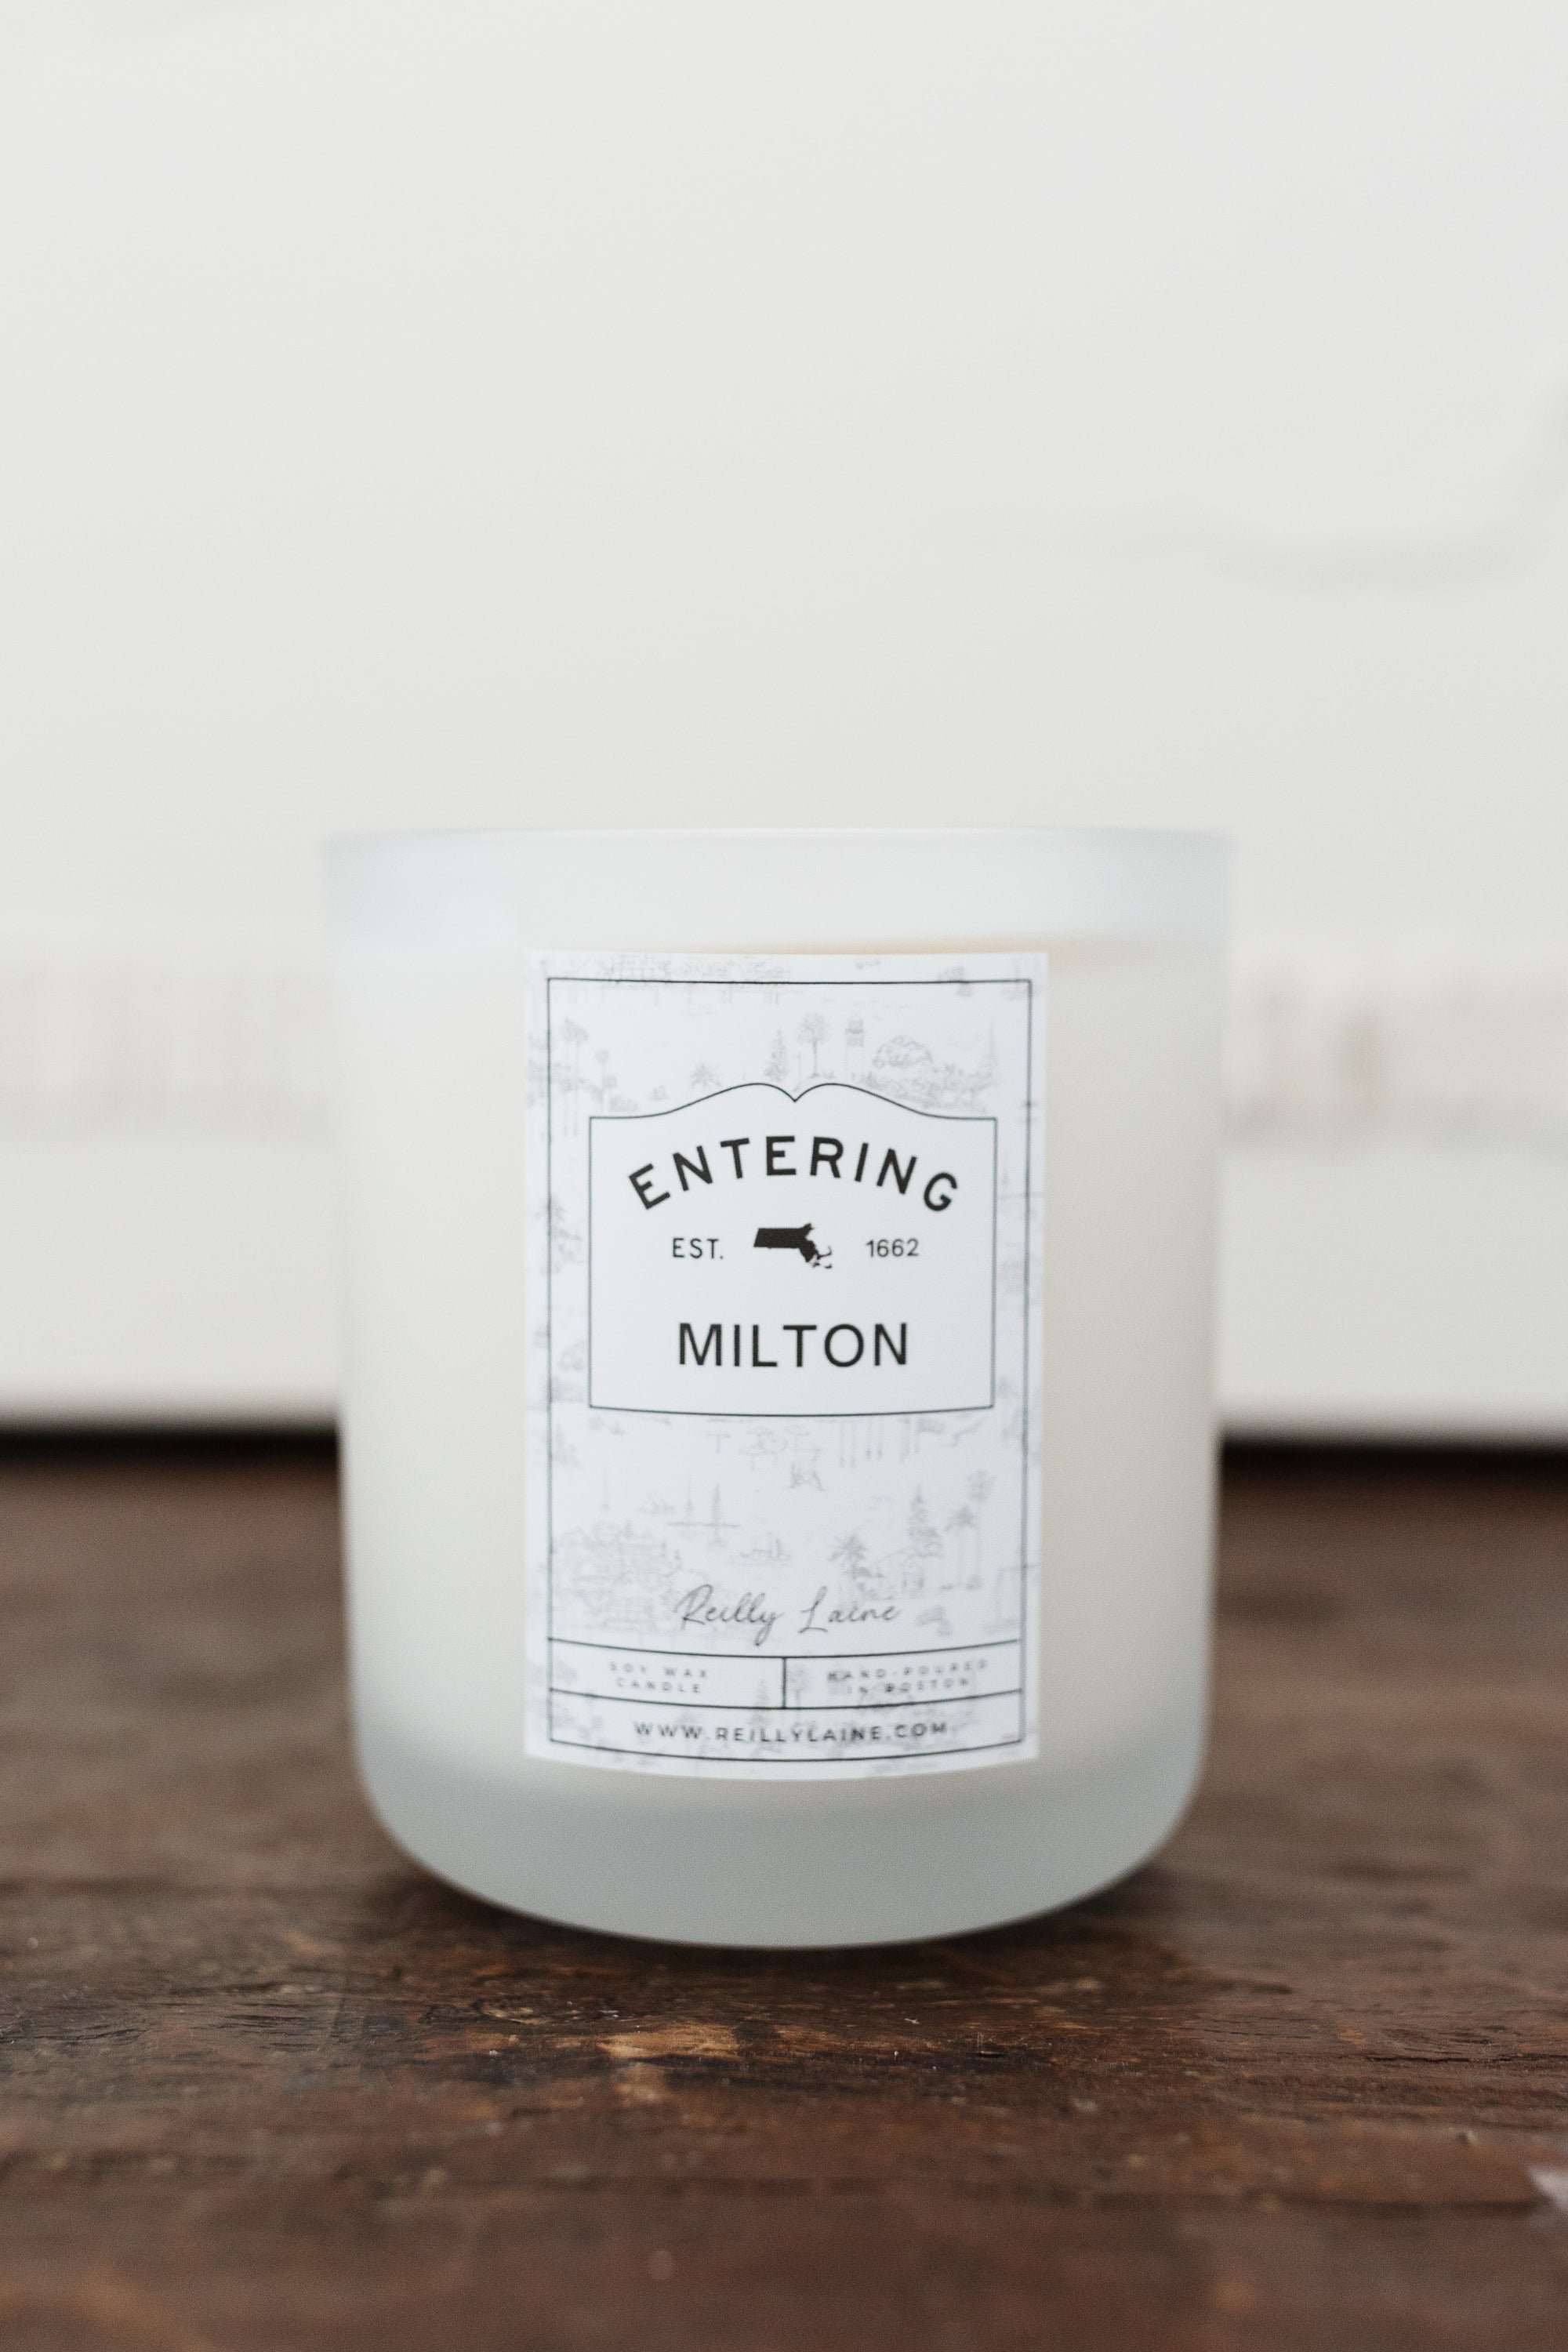 Now Entering: Milton Candle Label